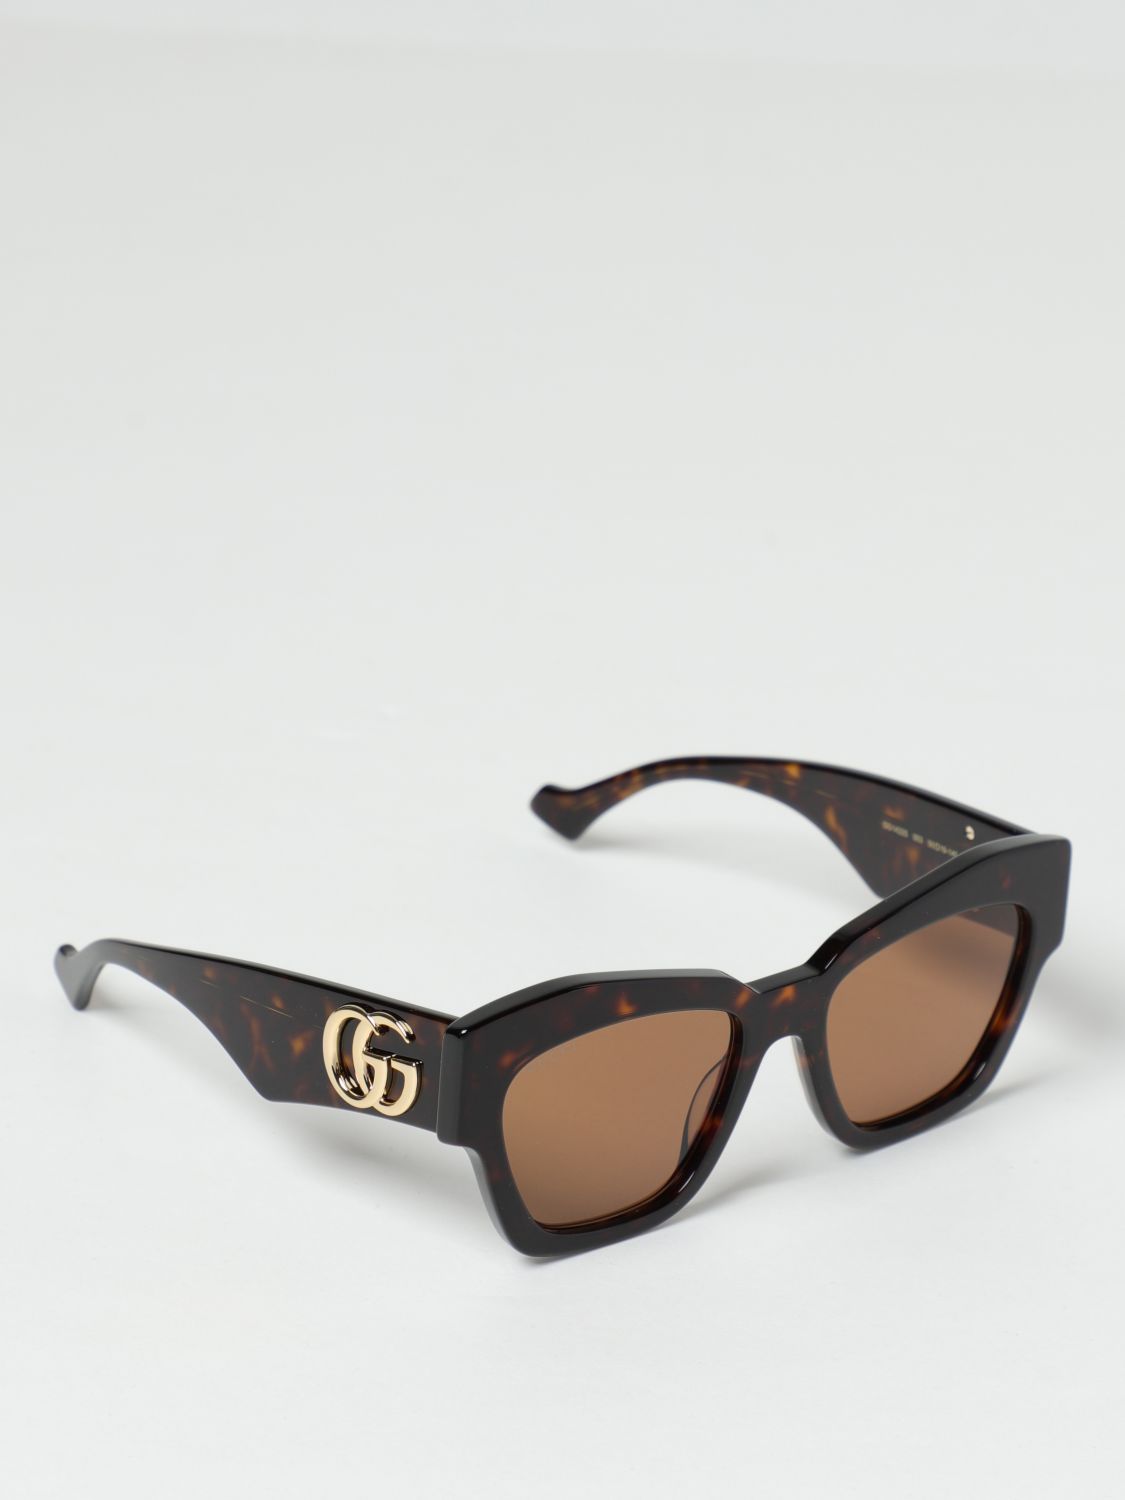 Gucci™ Sunglasses | Chic sunglasses, Big sunglasses women, Sunglasses